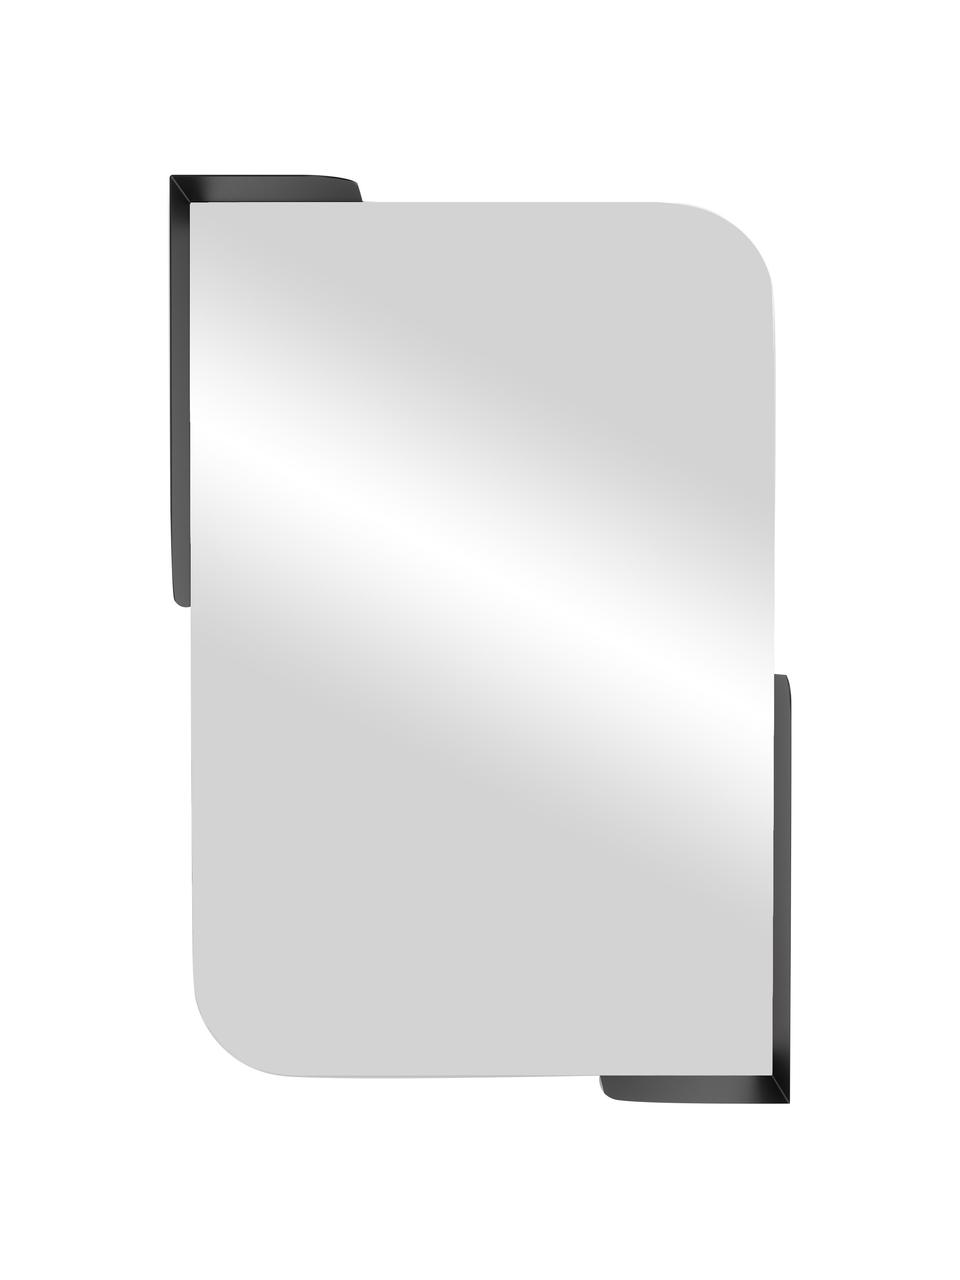 Nástěnné zrcadlo s policí Alcove, Černá, Š 52 cm, V 77 cm